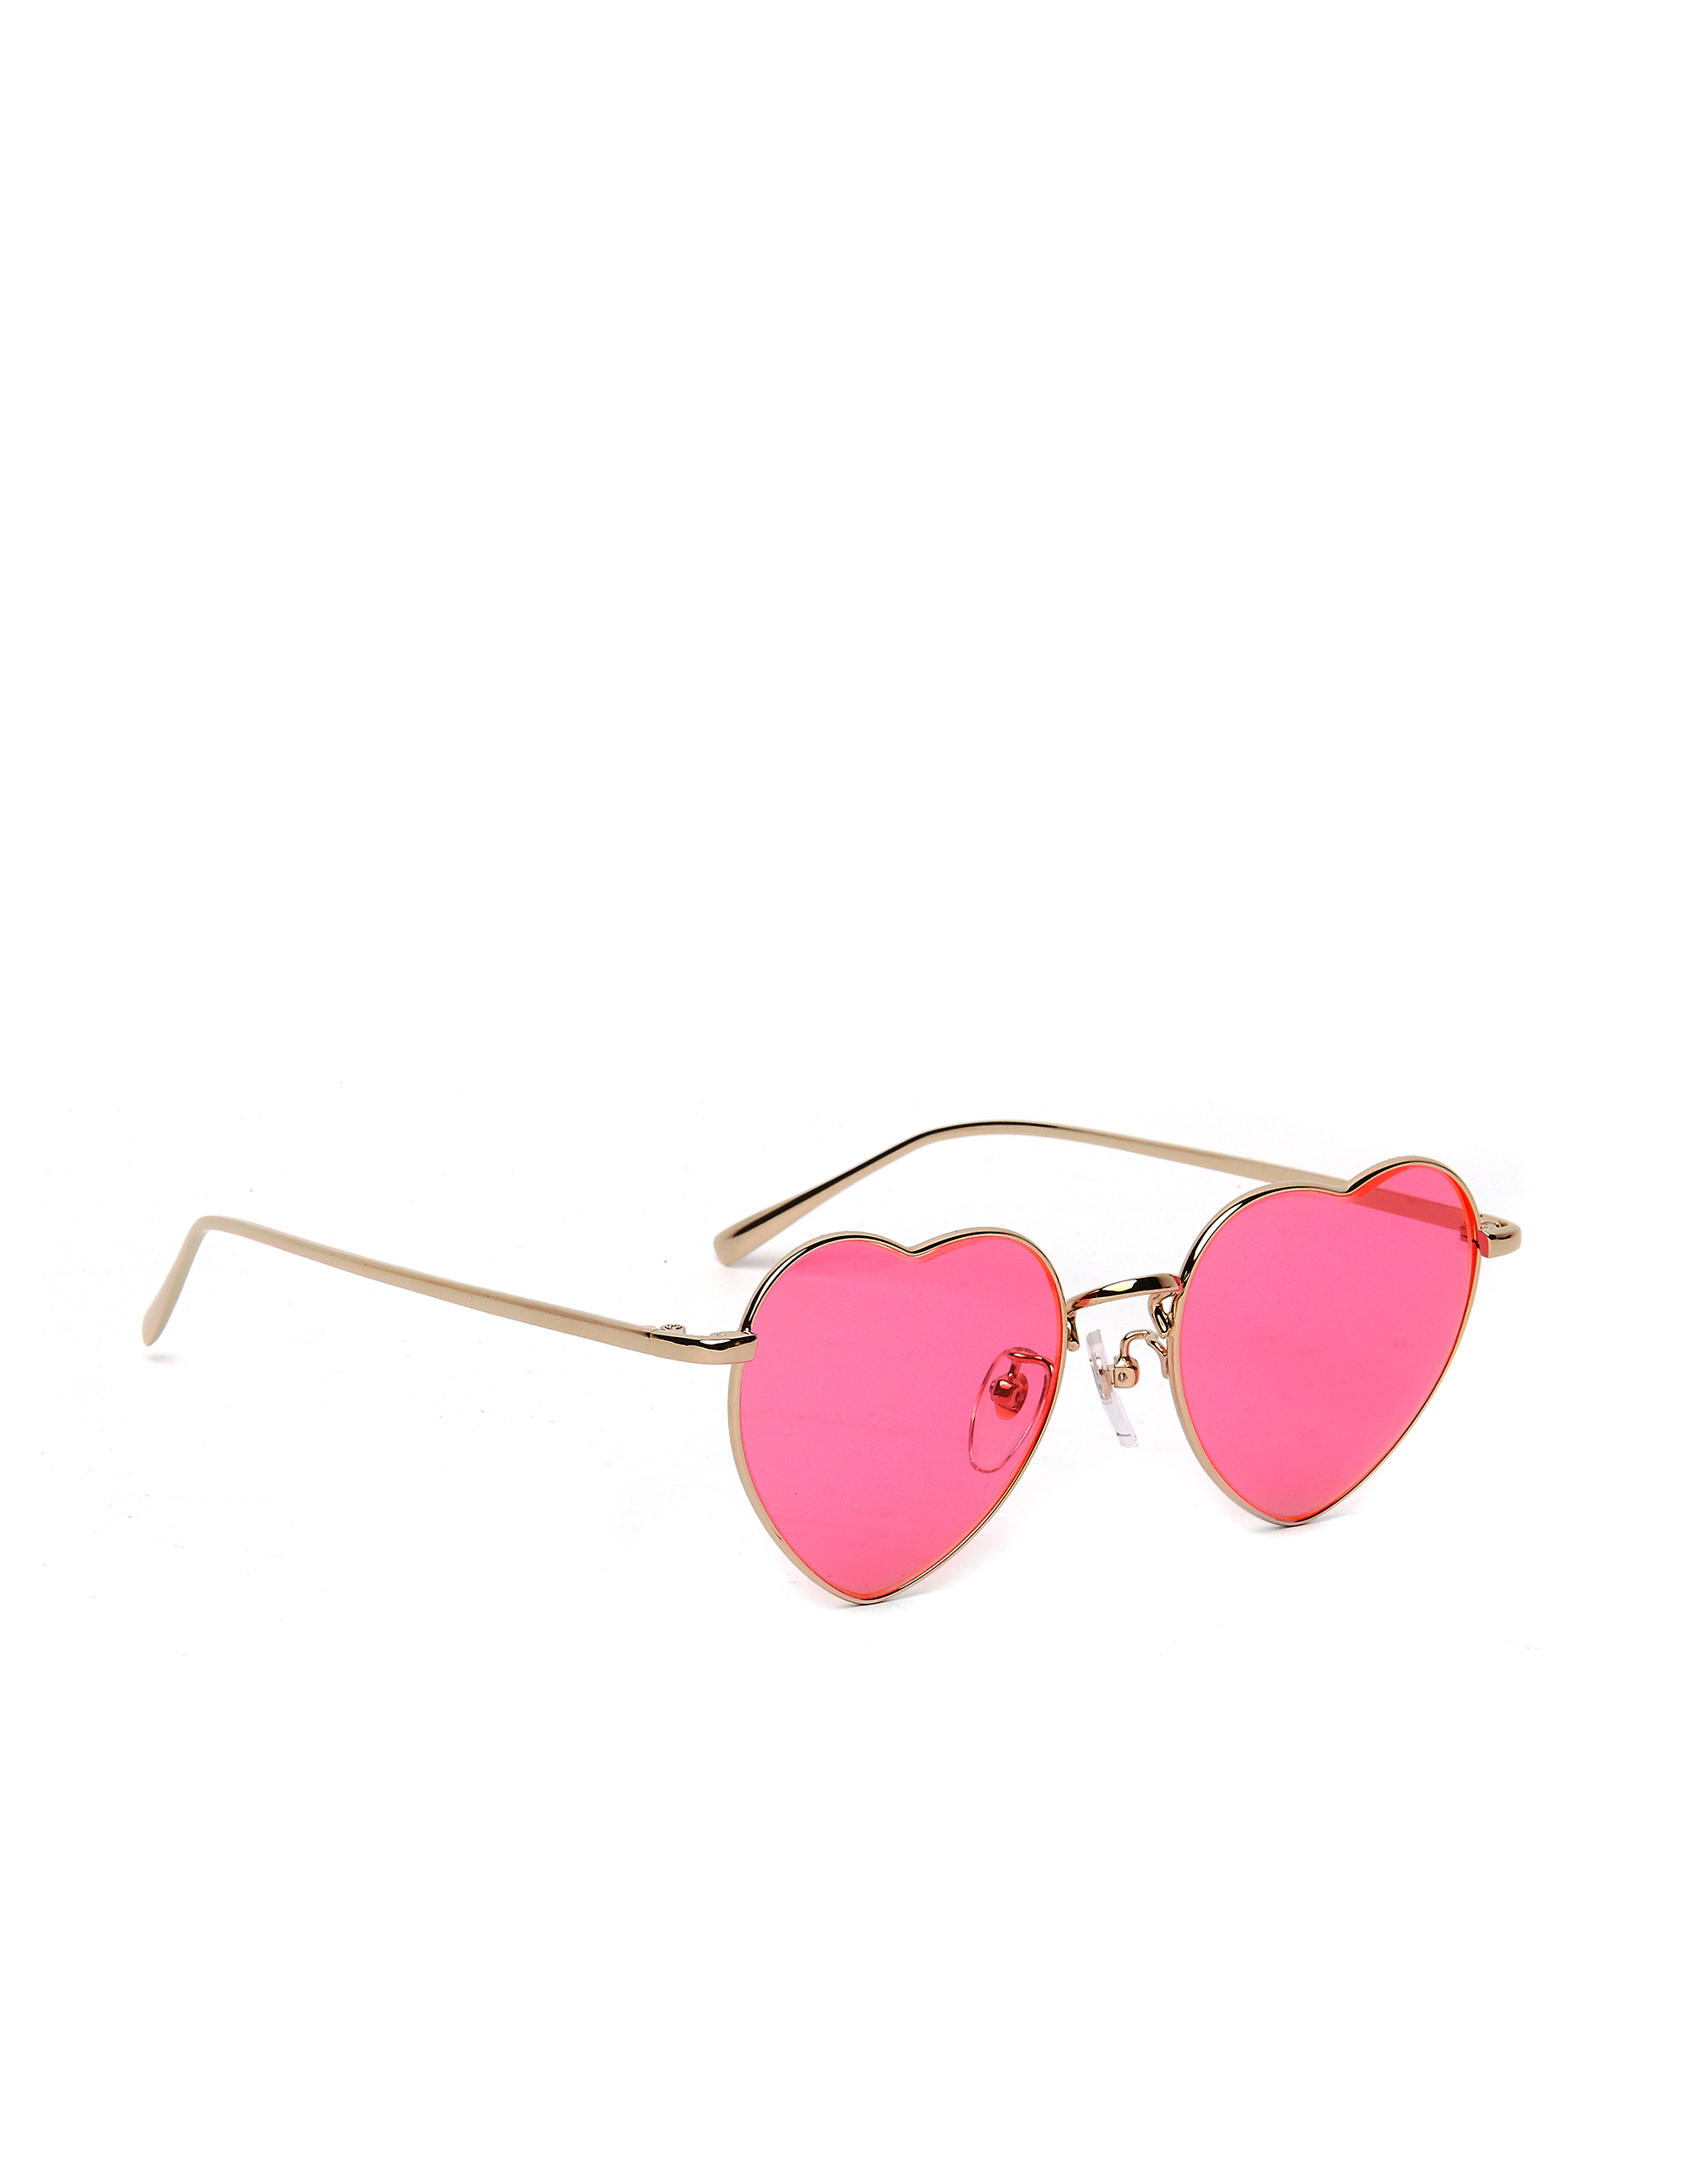 Очки с розовыми линзами в форме сердца Undercover UCY1E02/pink, размер One Size